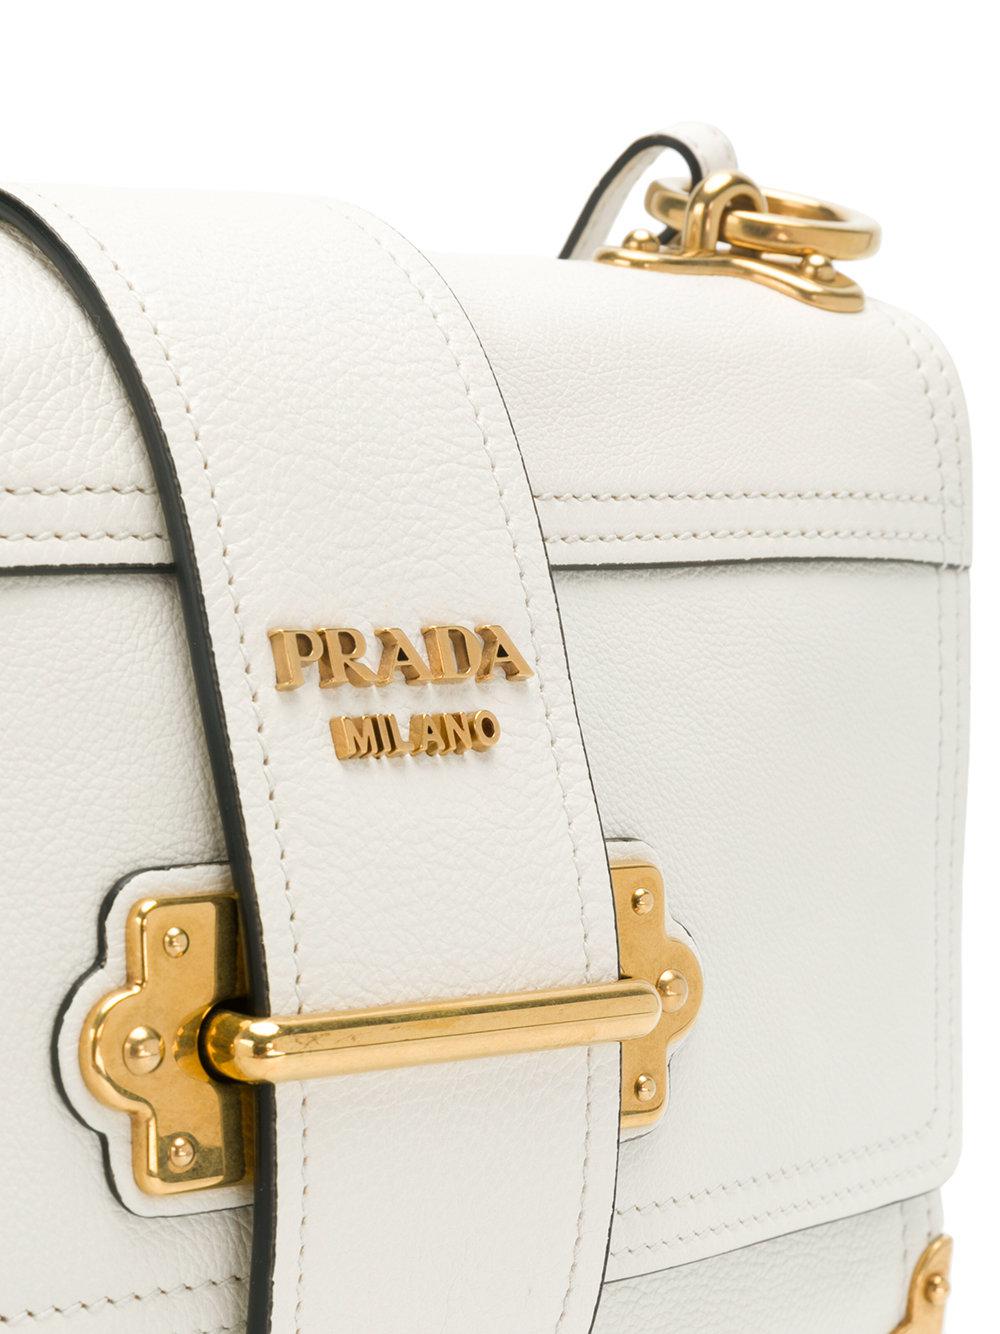 Prada Leather Cahier Shoulder Bag in White - Lyst